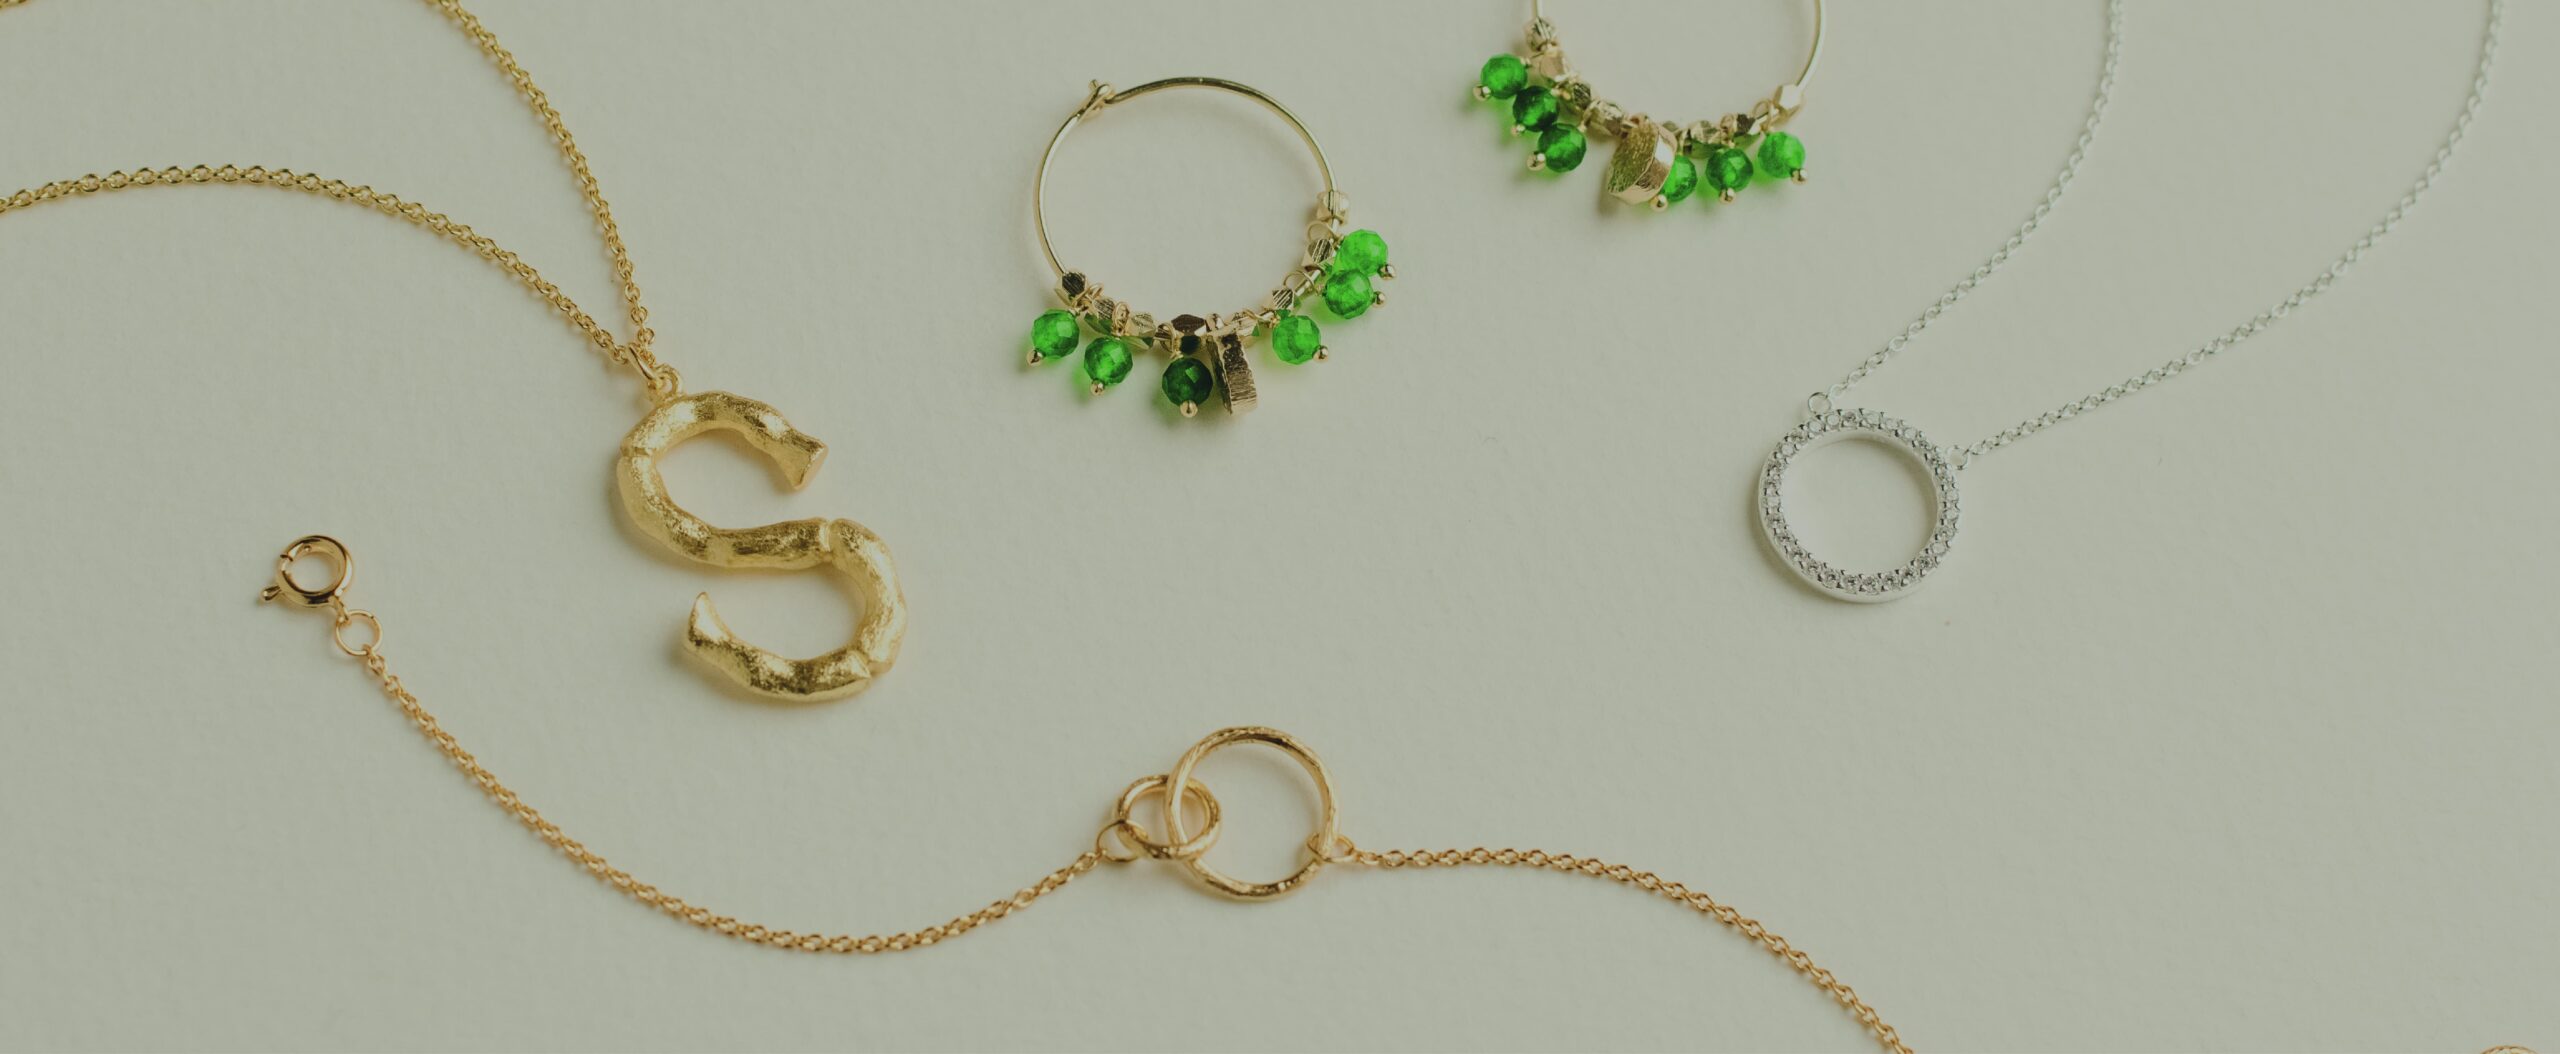 Jewellery Gifts under £50 from Silverado Jewellery